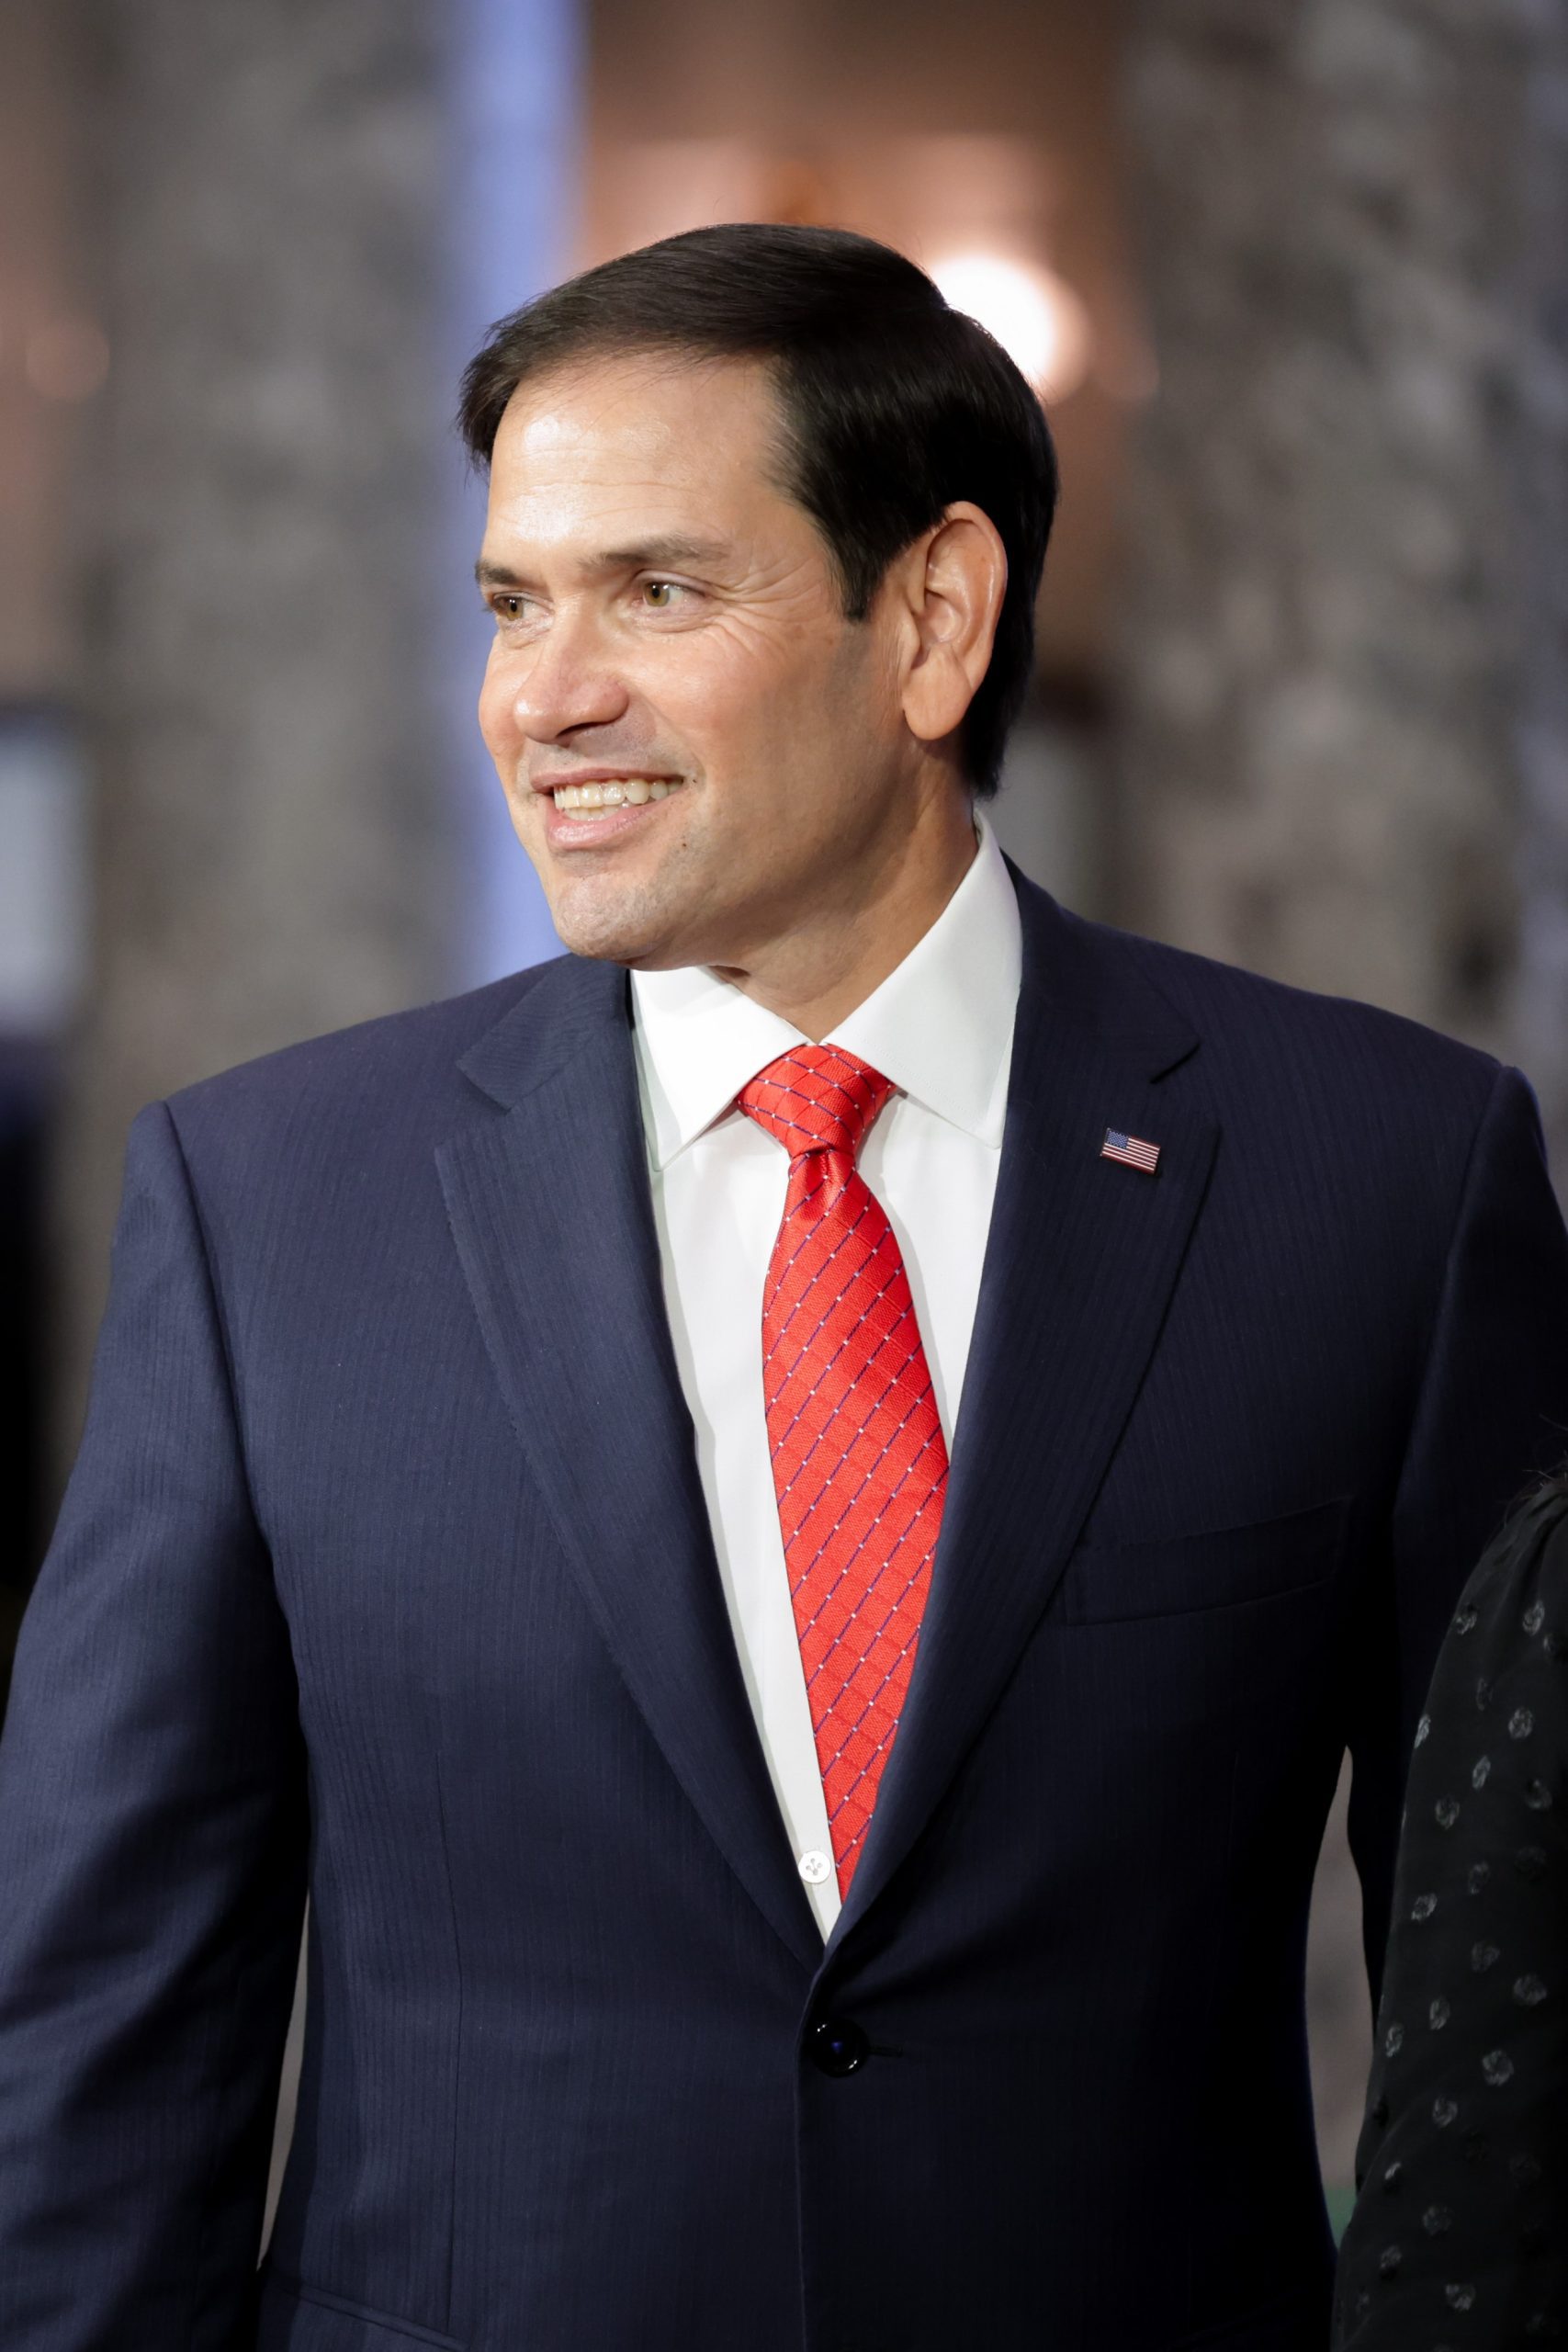 Senator Rubio speaking at U.S. Senate